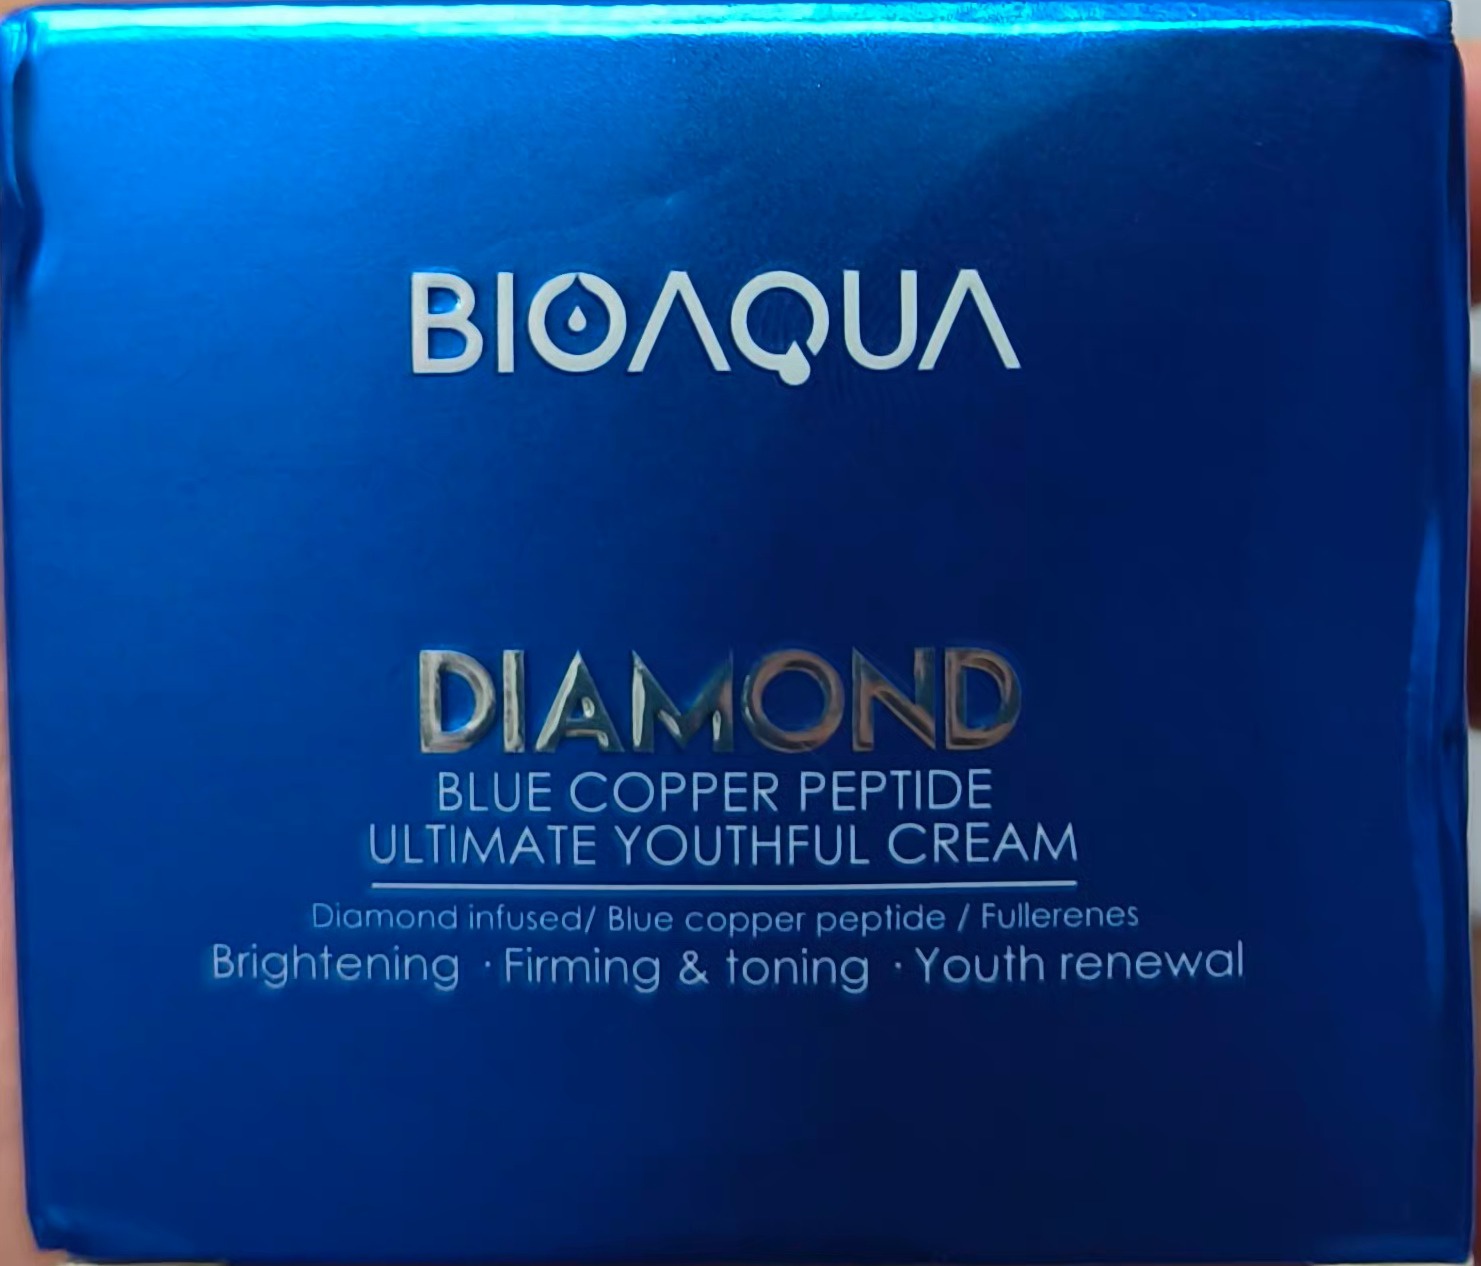 BioAqua Diamond Blue Copper Peptide Ultimate Youthful Cream